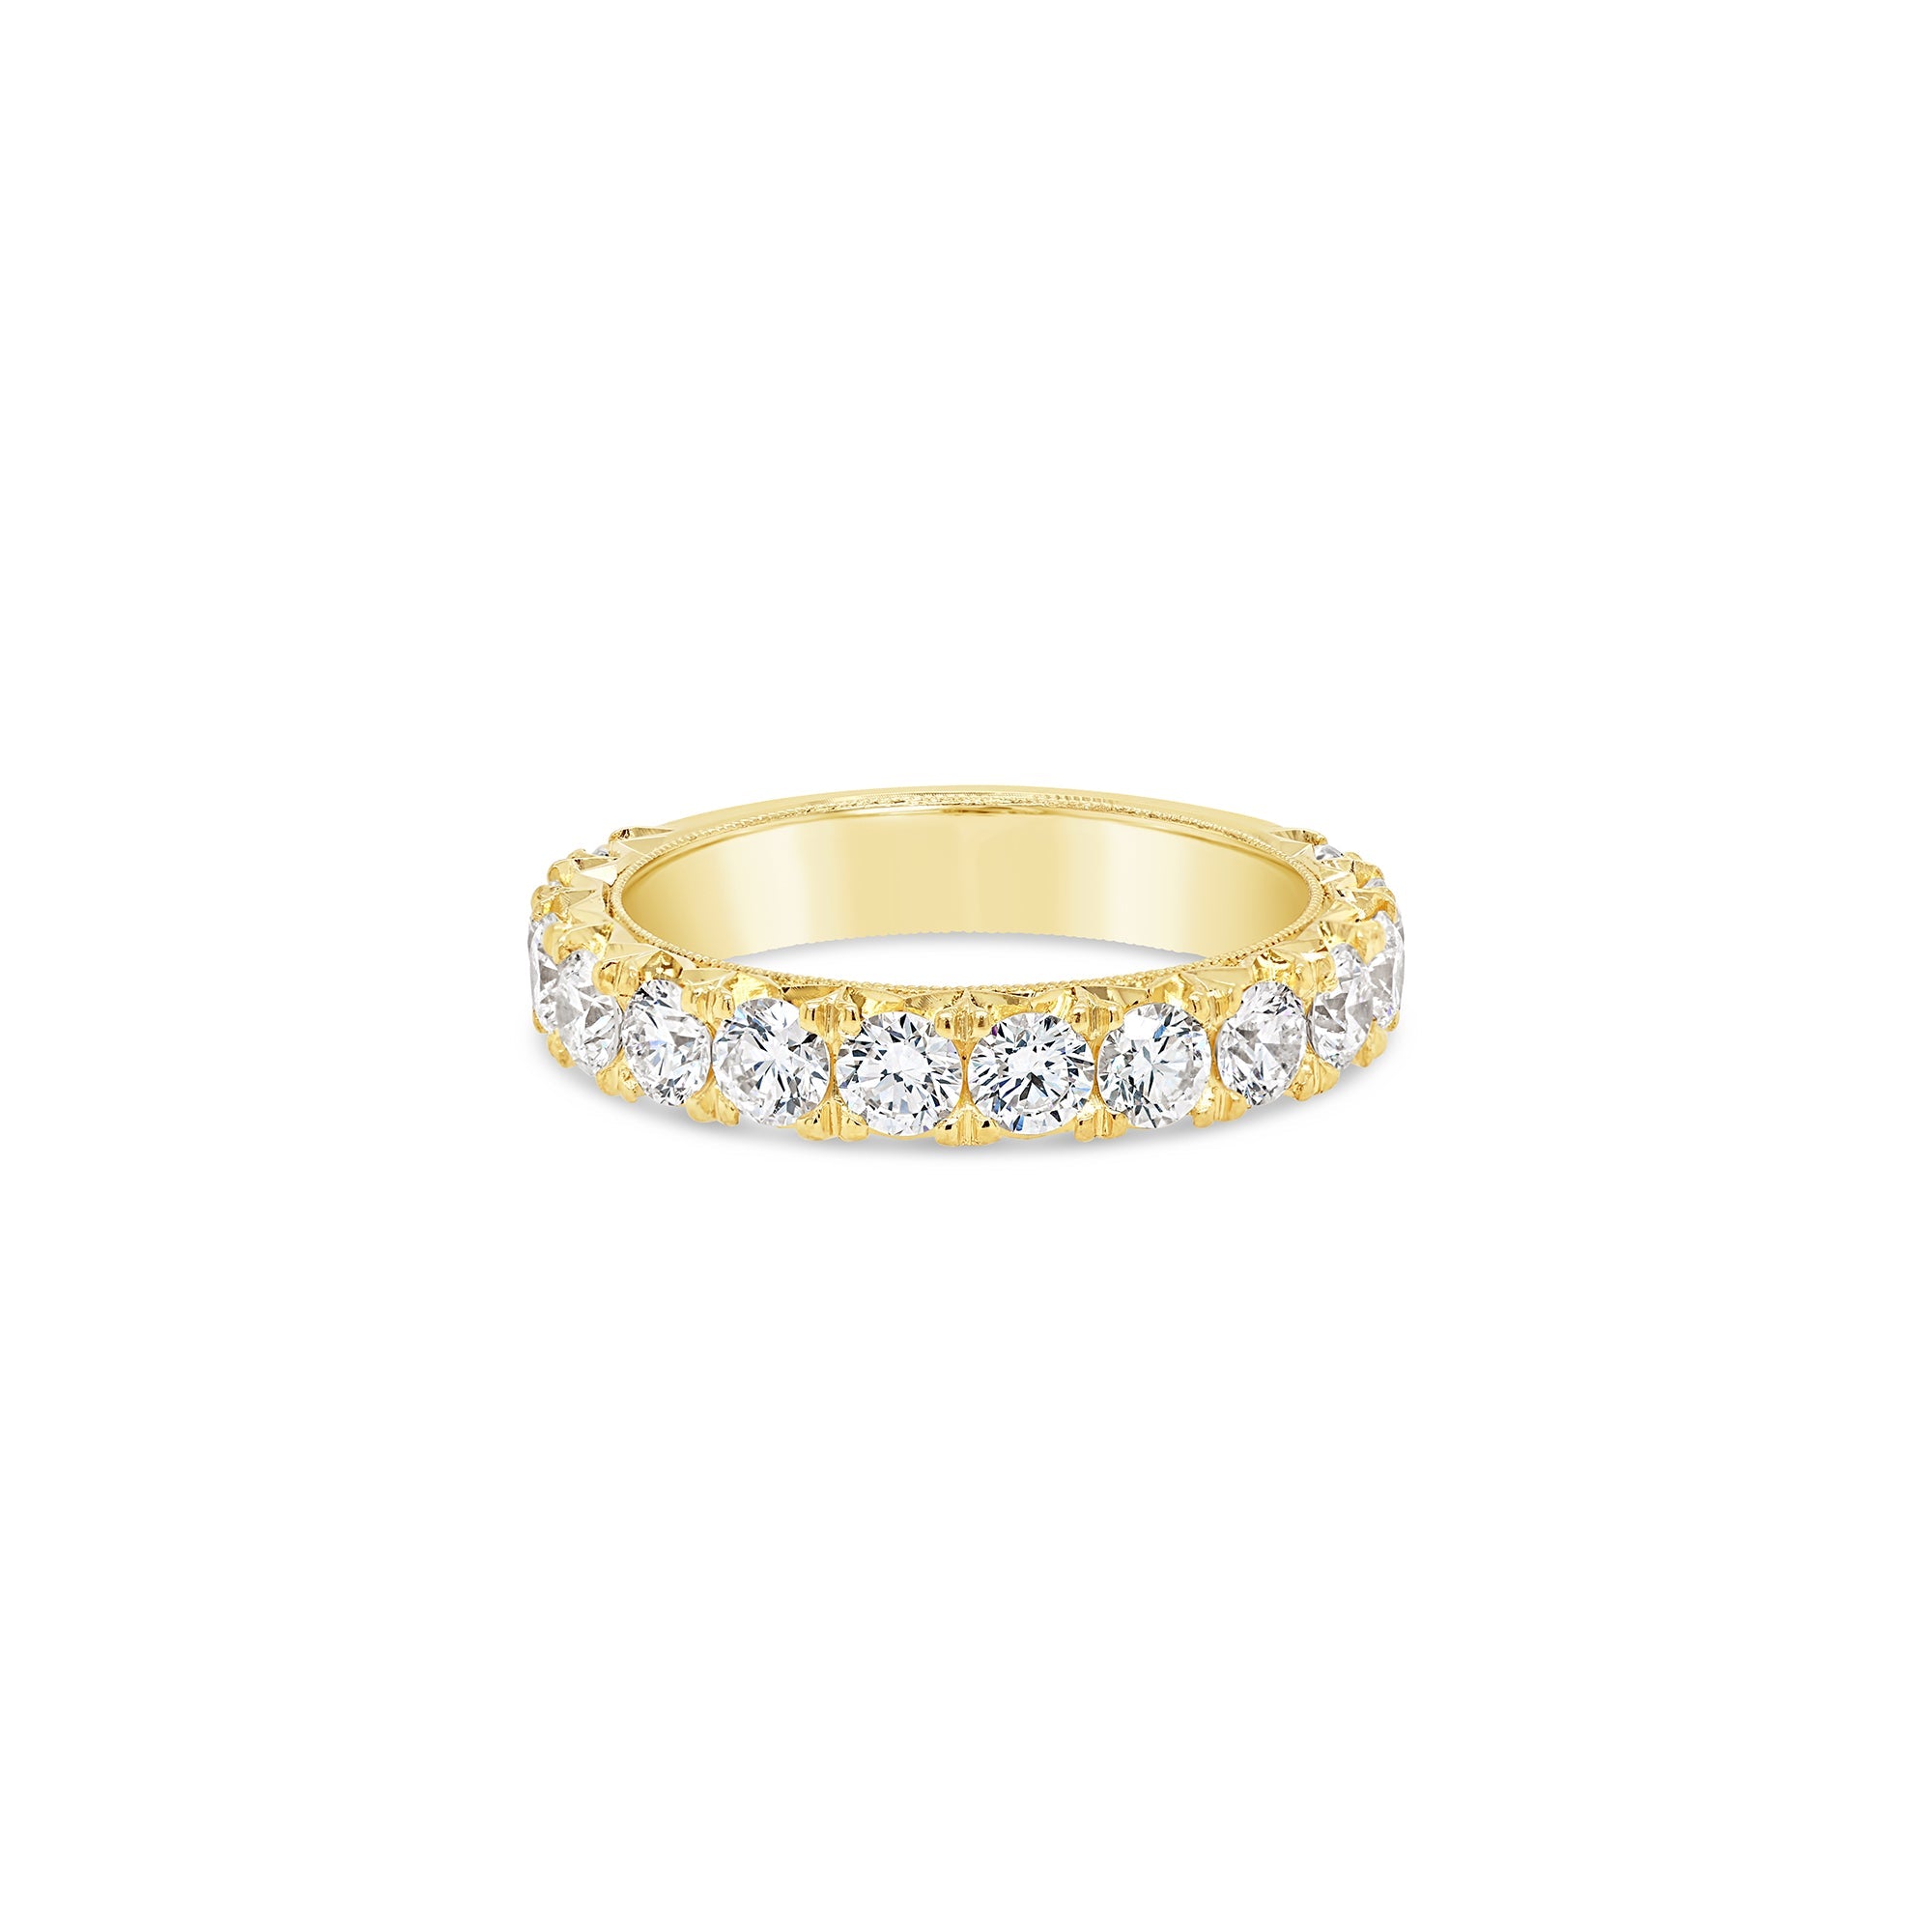 Round Brilliant Cut Diamond Ring Yellow Gold